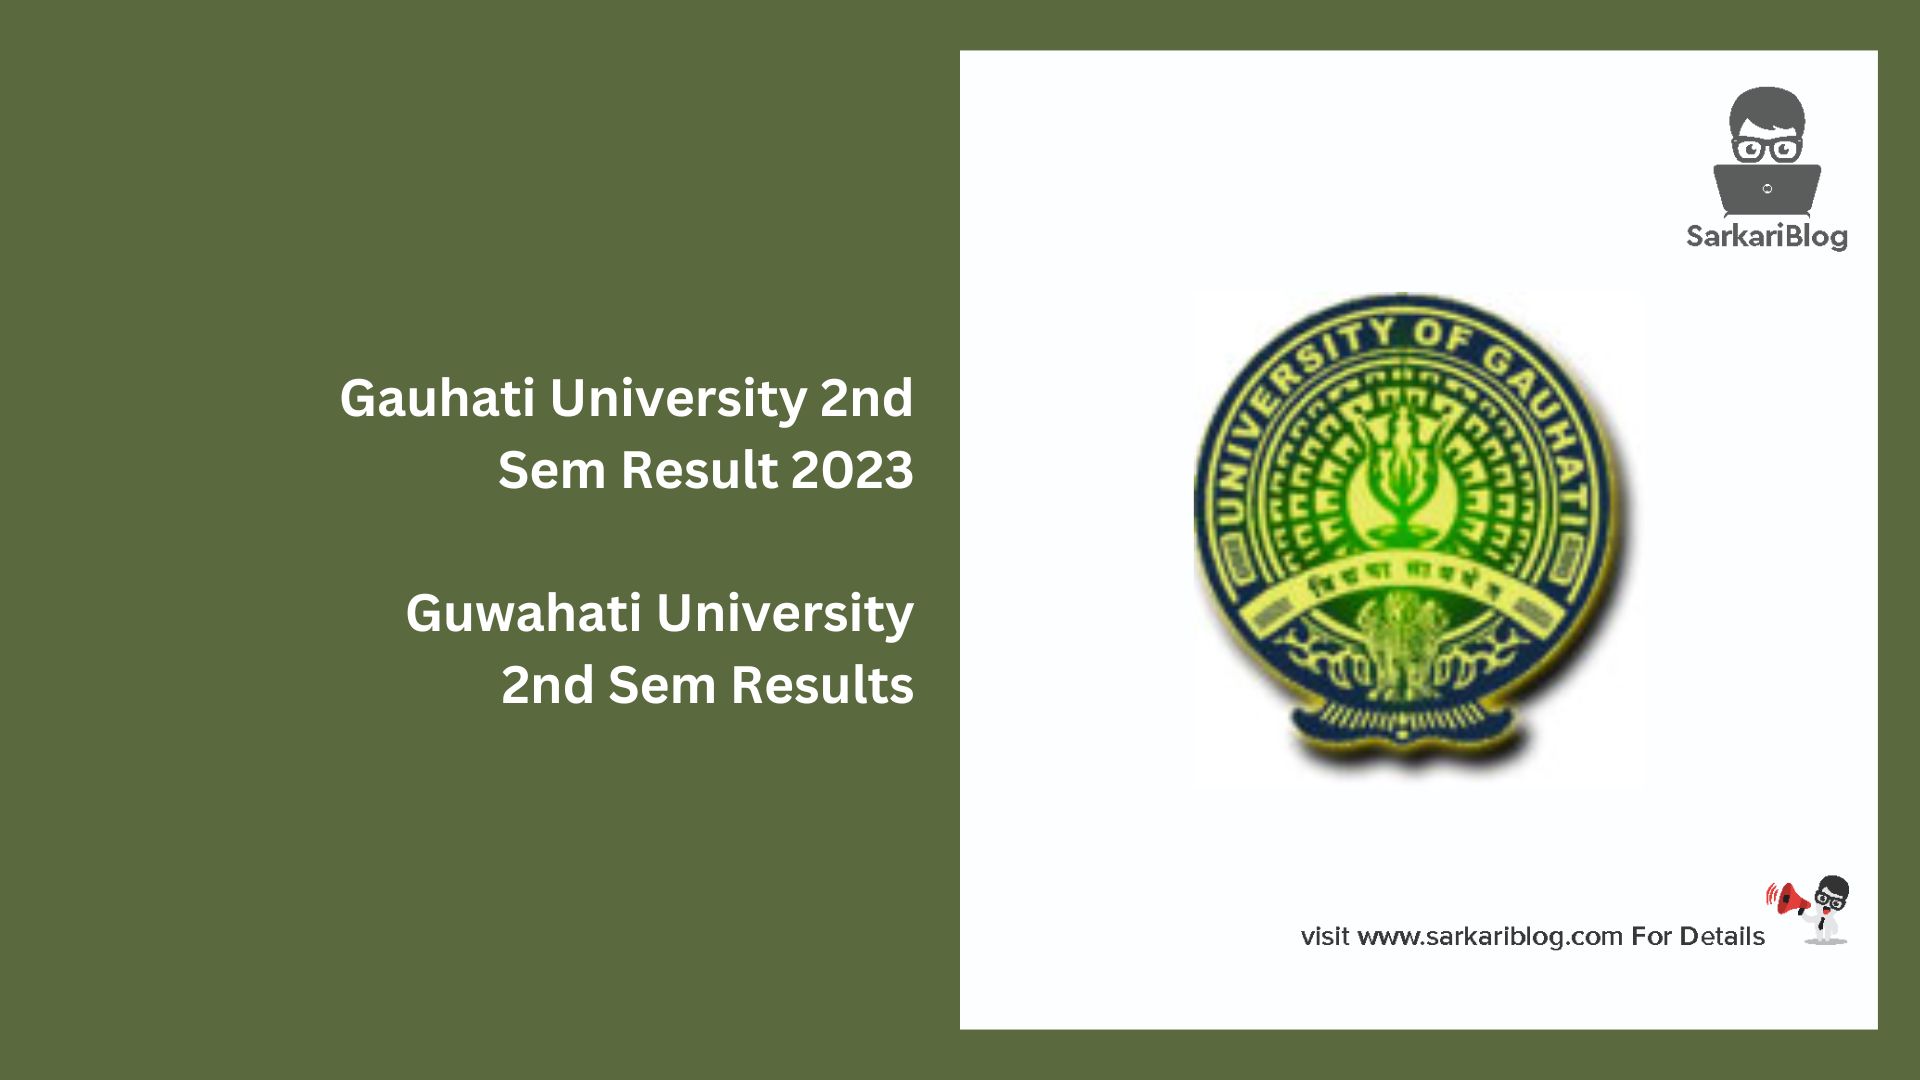 Gauhati University 2nd Sem Result 2023